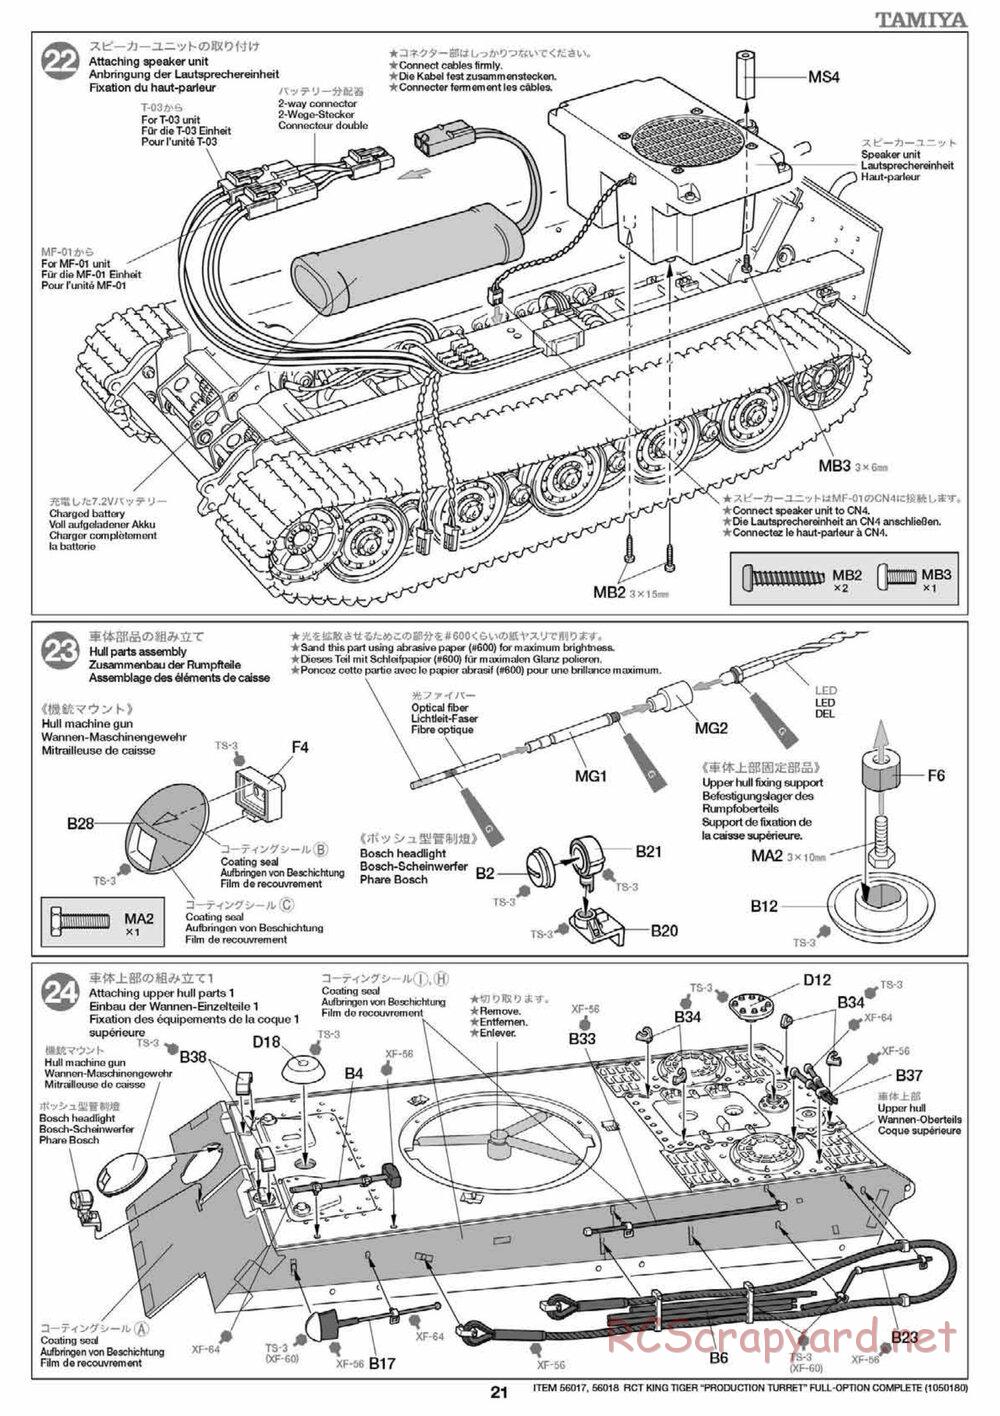 Tamiya - King Tiger - 1/16 Scale Chassis - Manual - Page 21